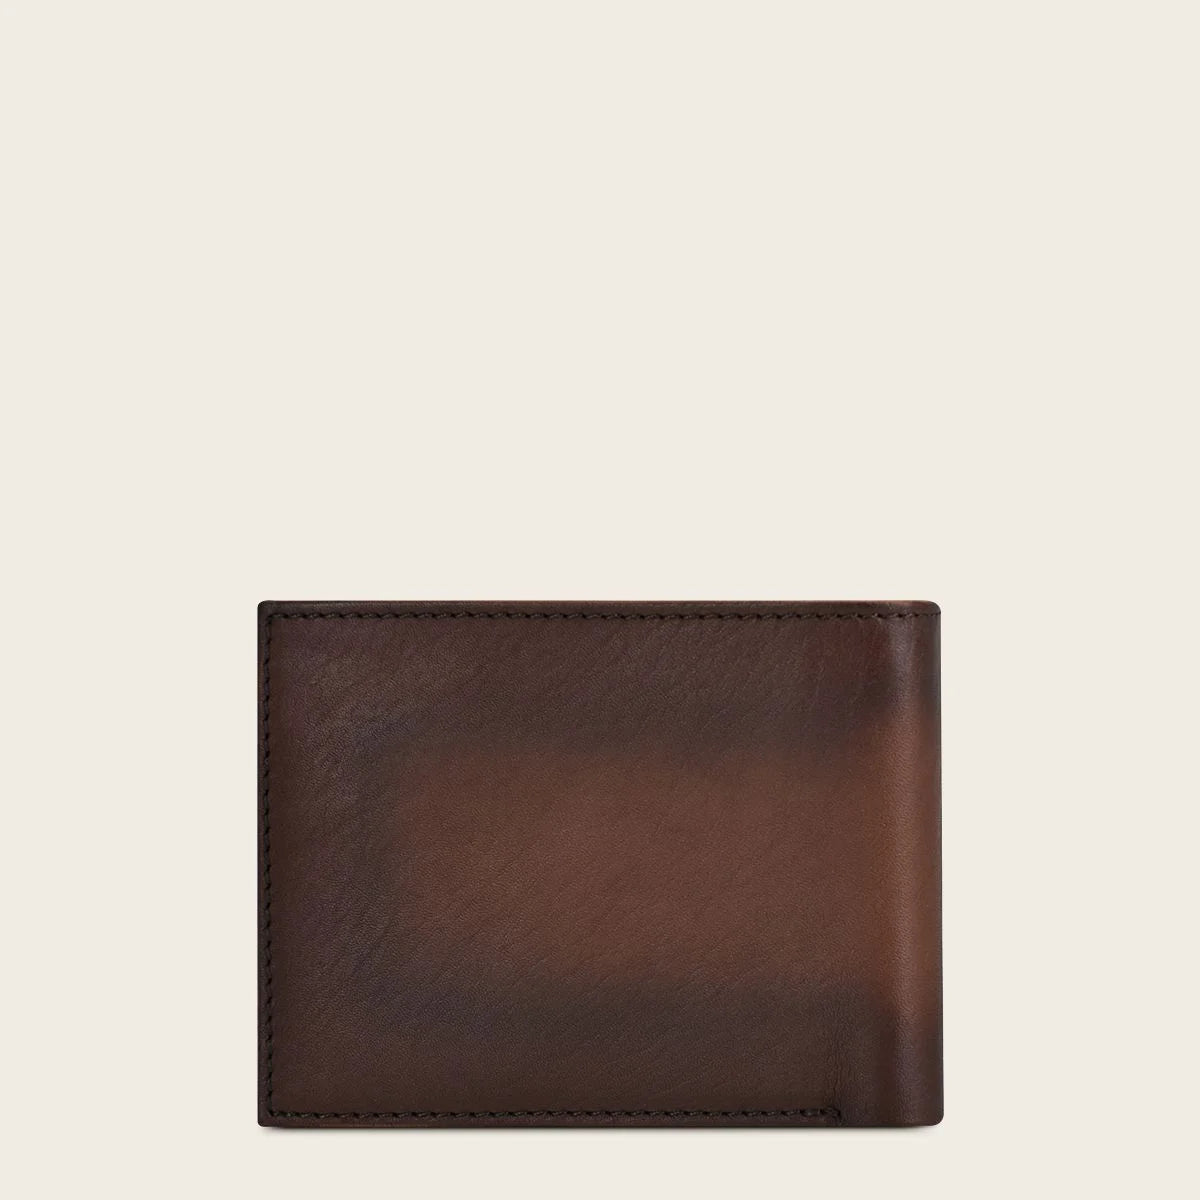 Gradient brown bovine leather wallet 4